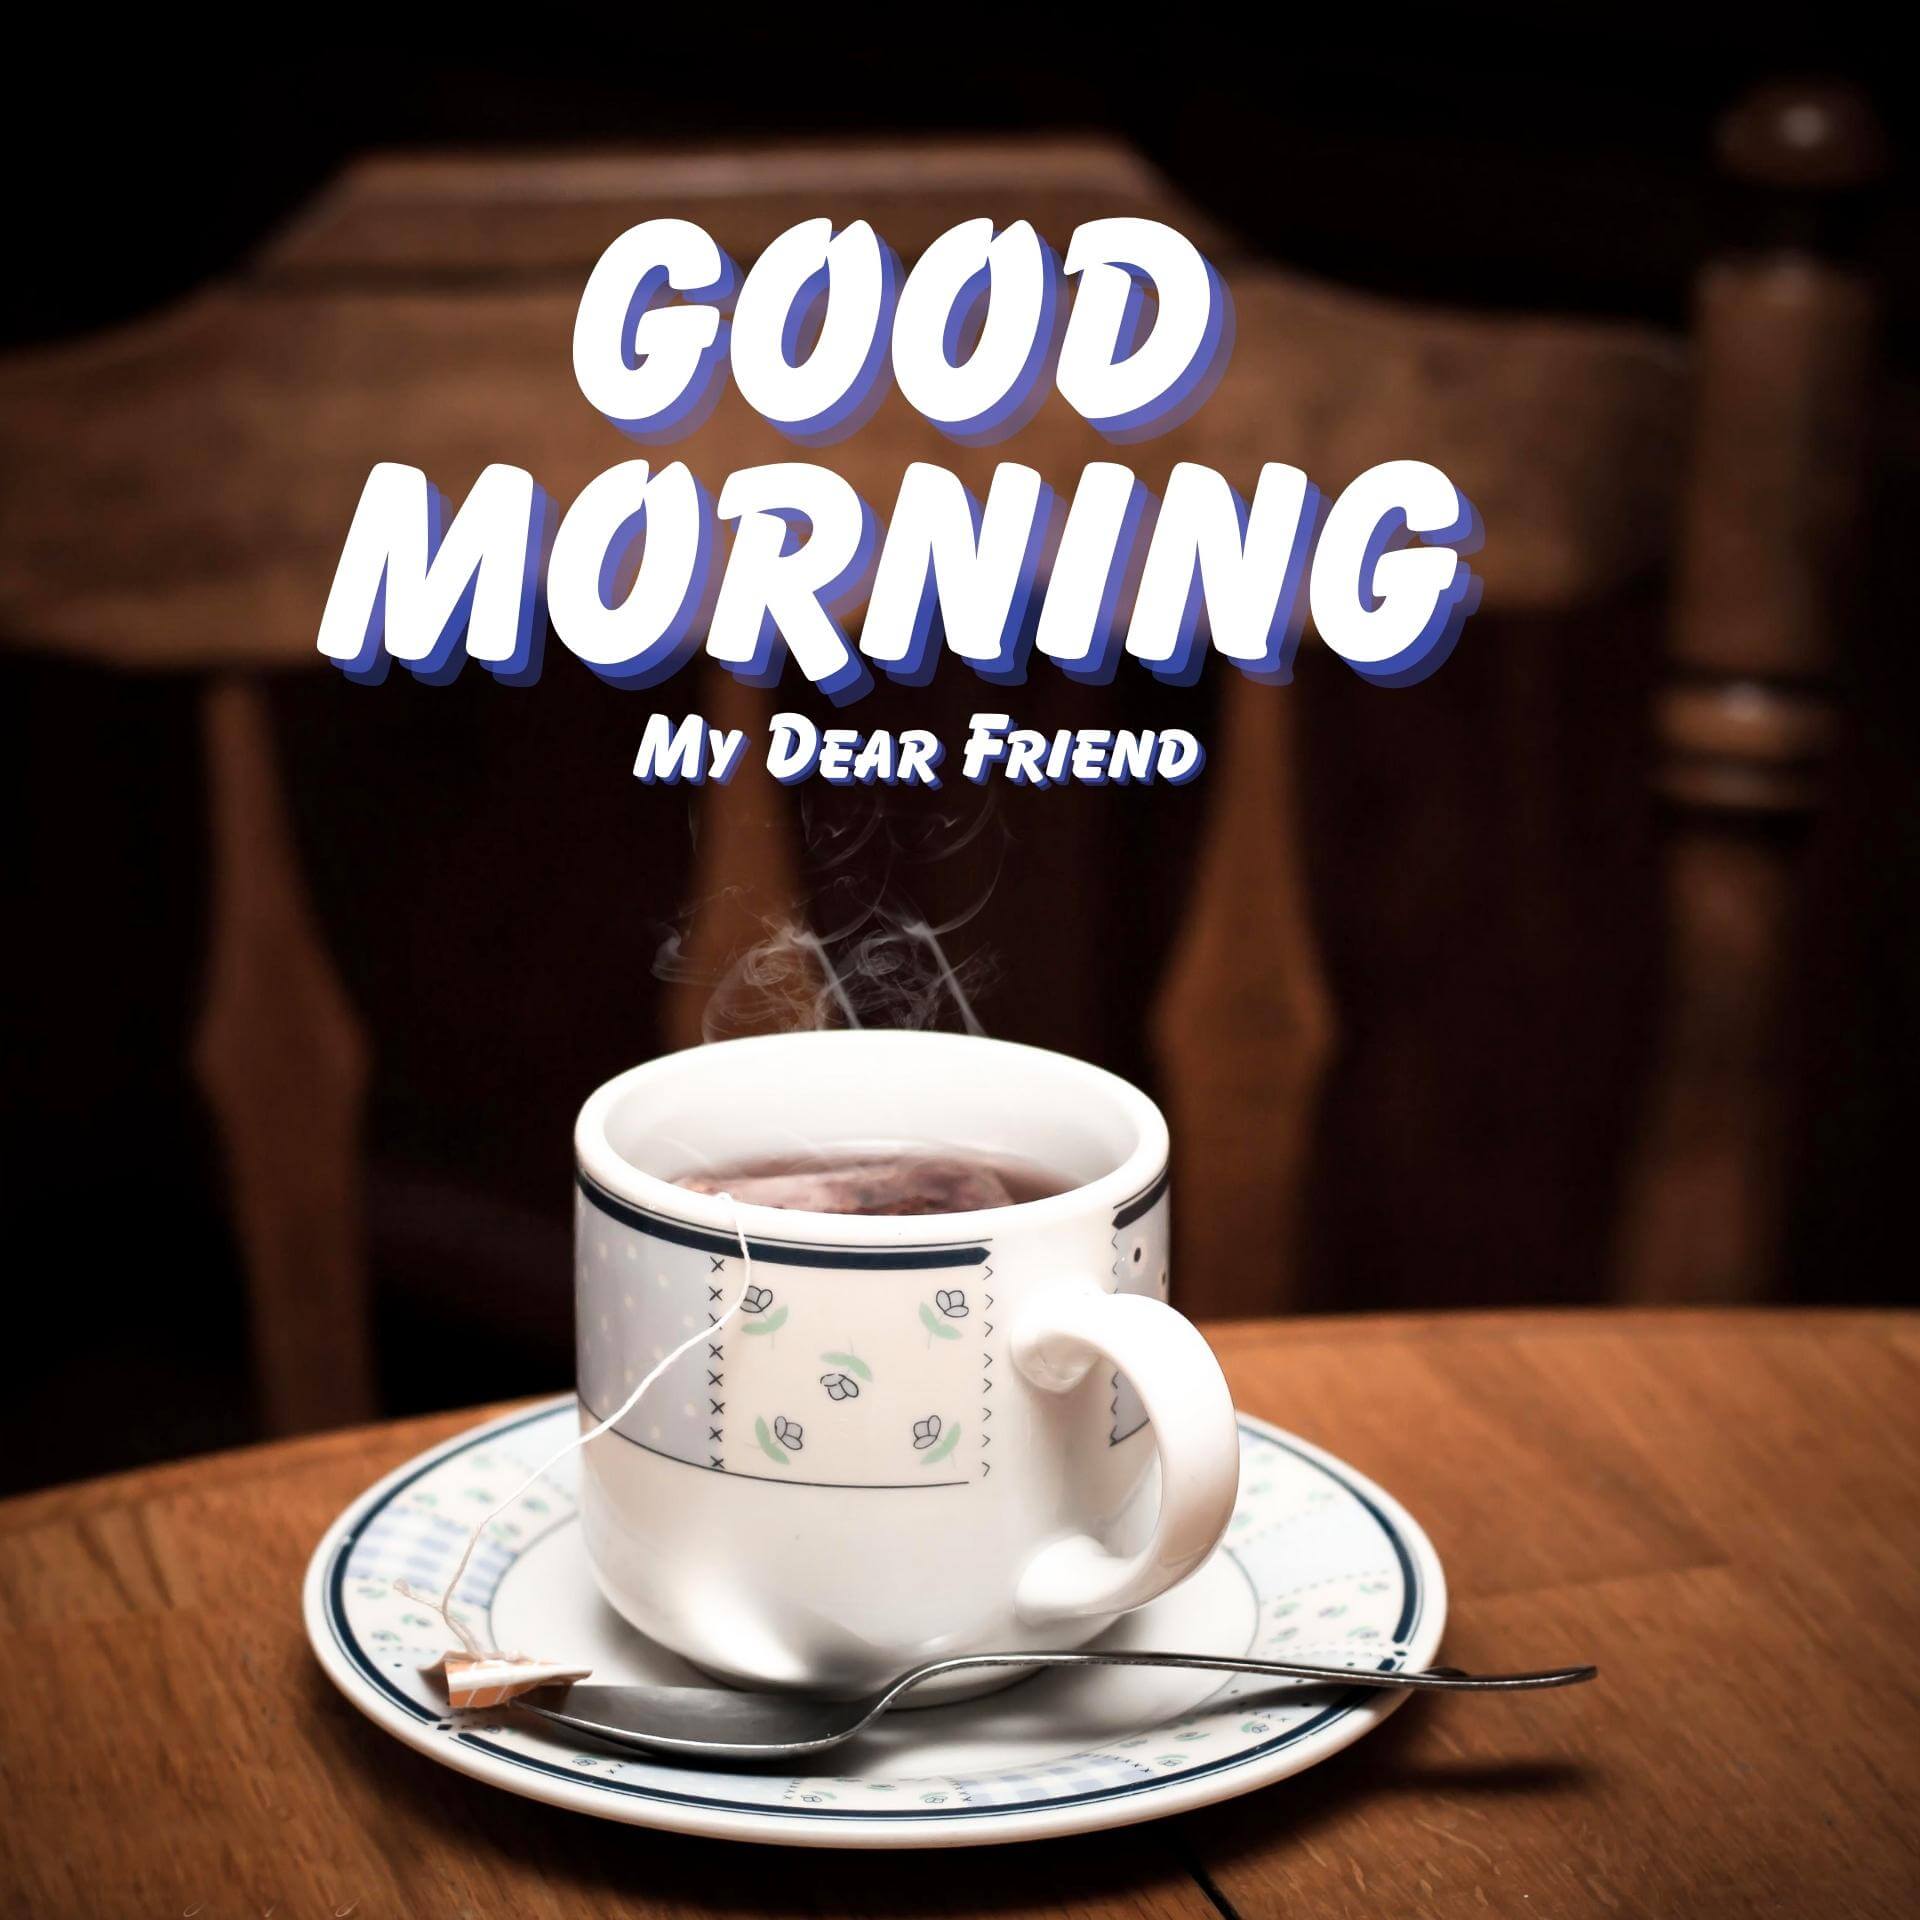 Good Morning Wallpaper Photo With Tea